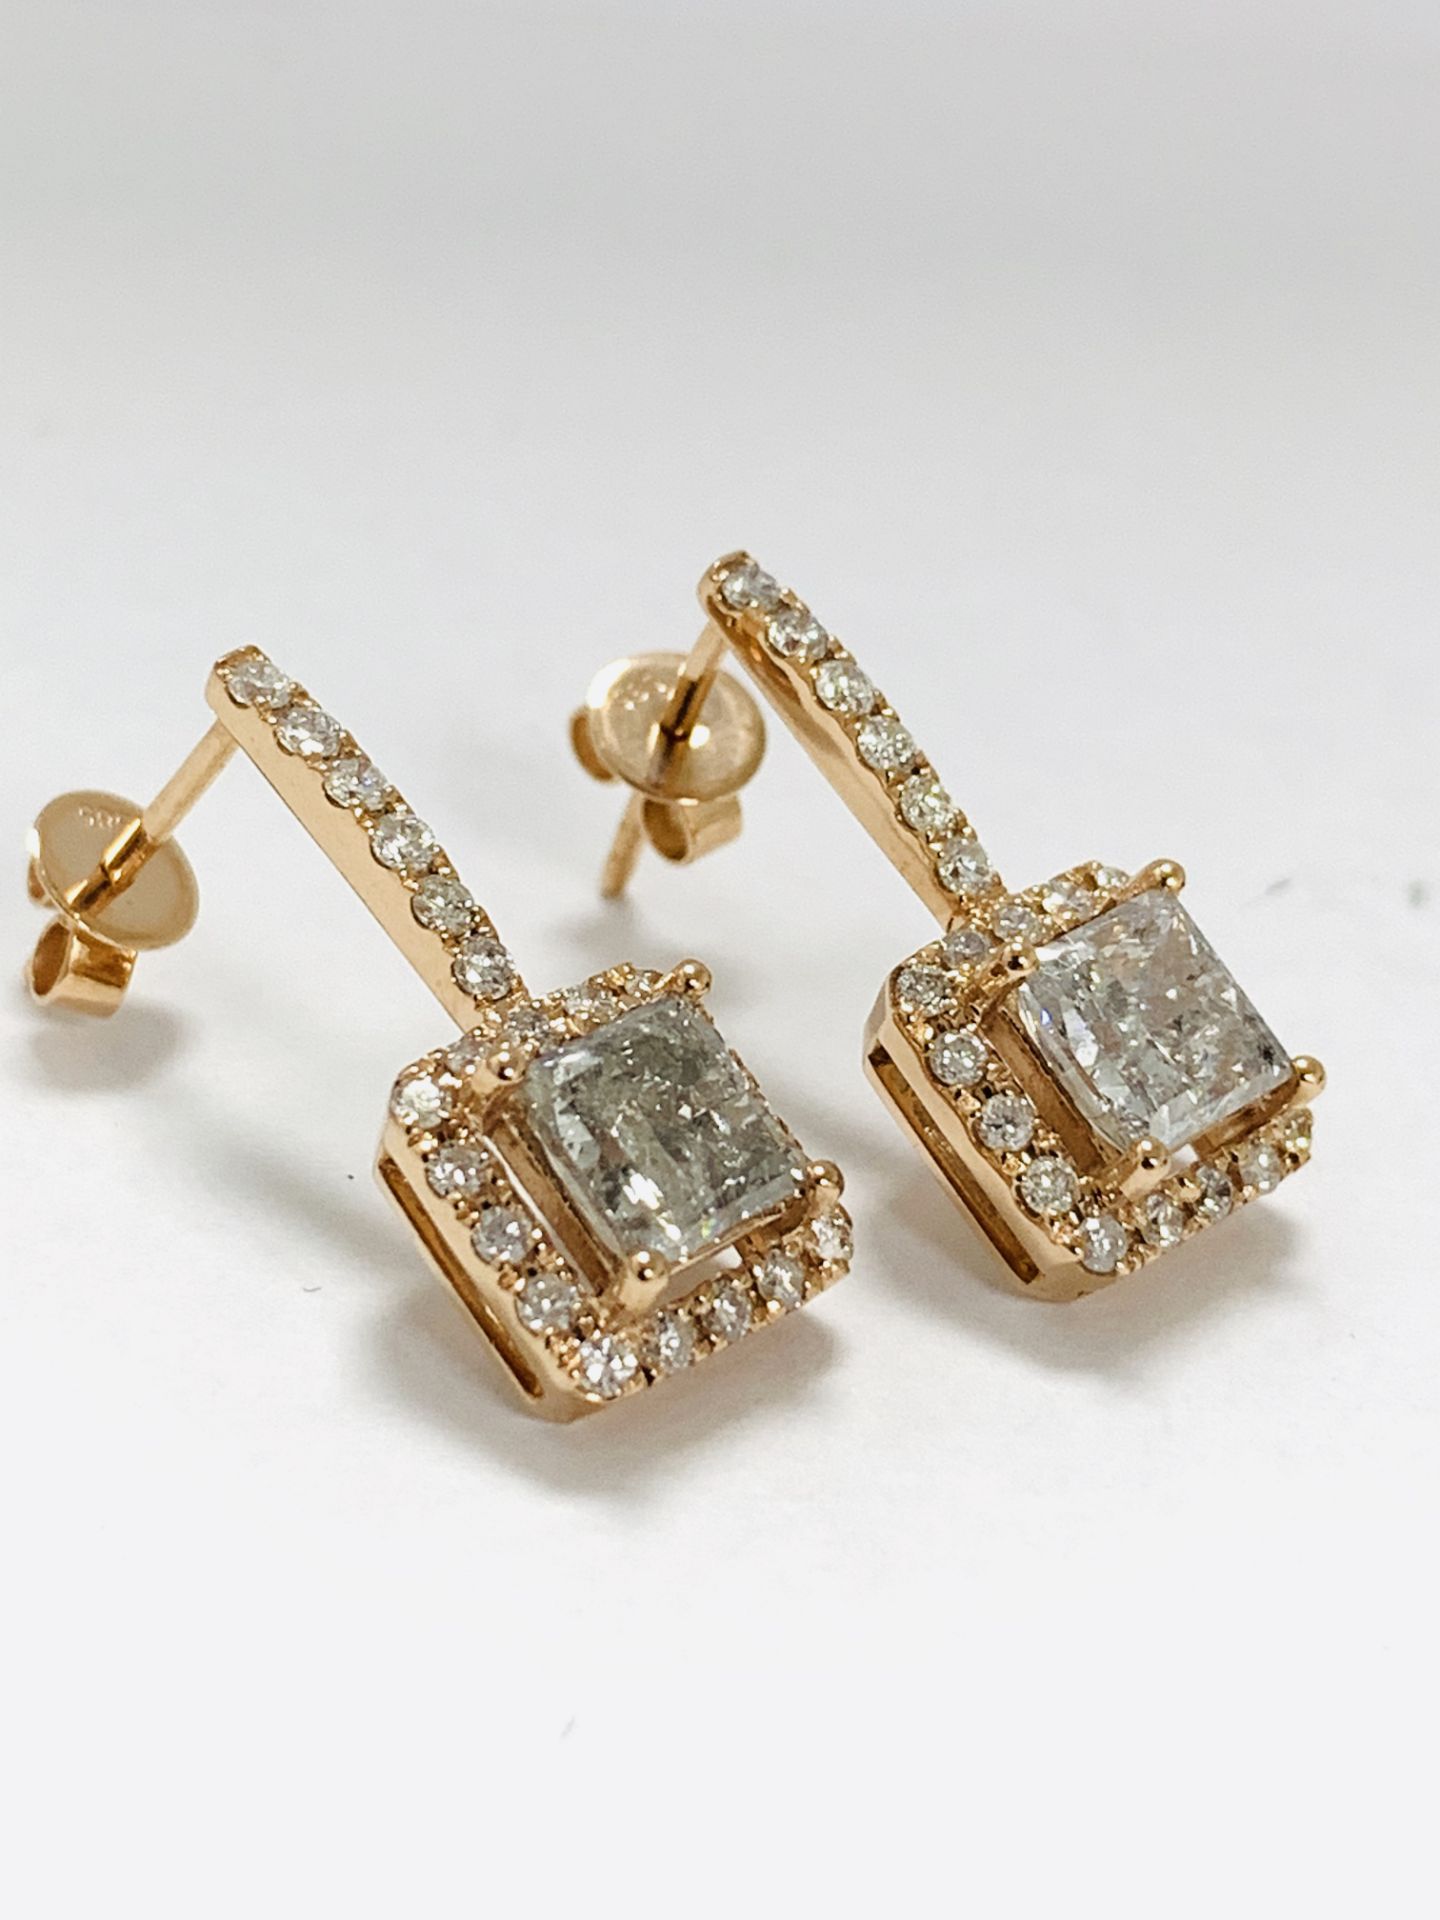 14K Rose Gold Pair Of Earrings - Image 5 of 8